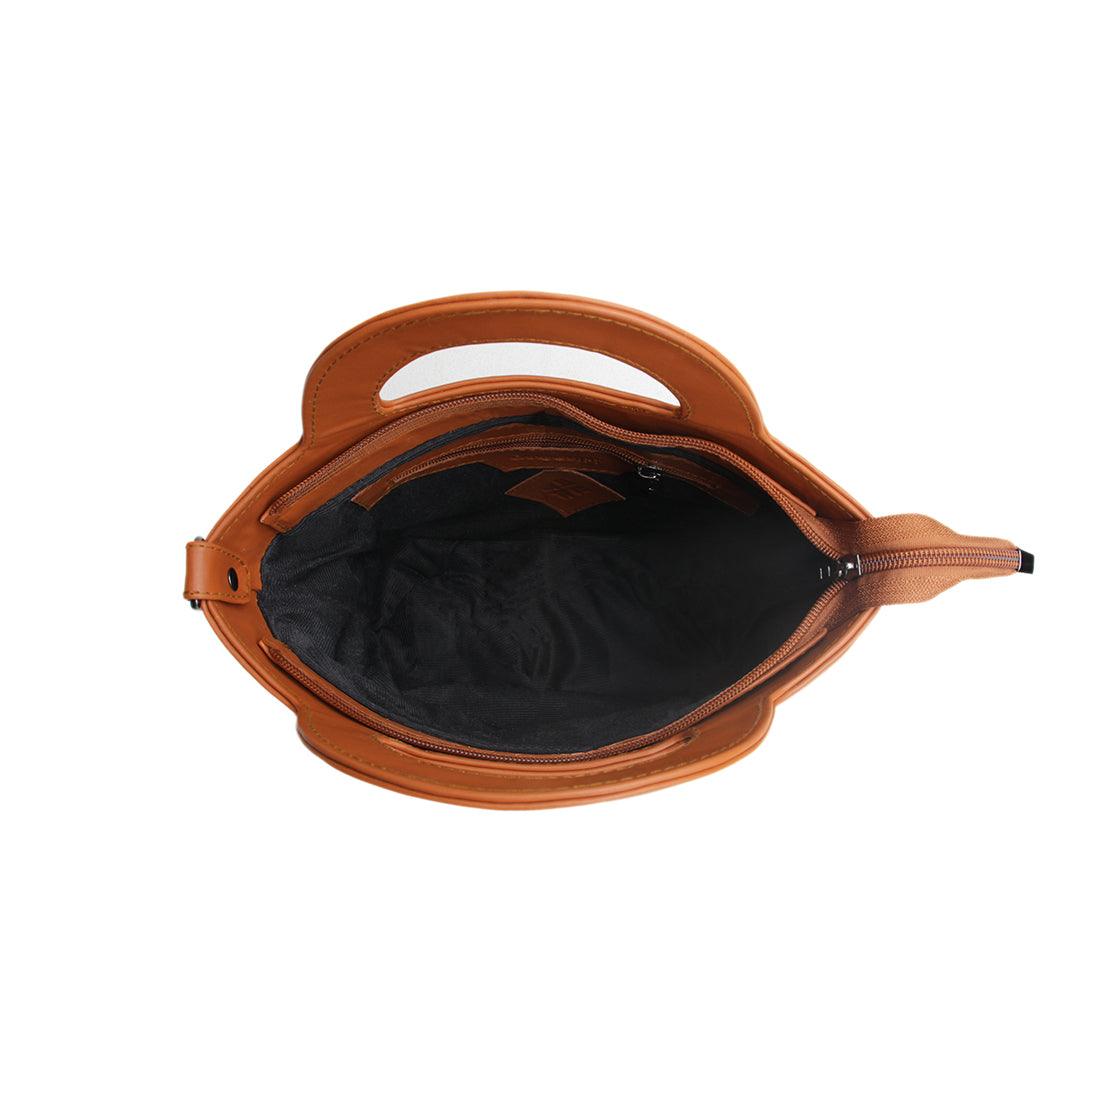 Black Top Handle Handbag Art - CANVAEGYPT